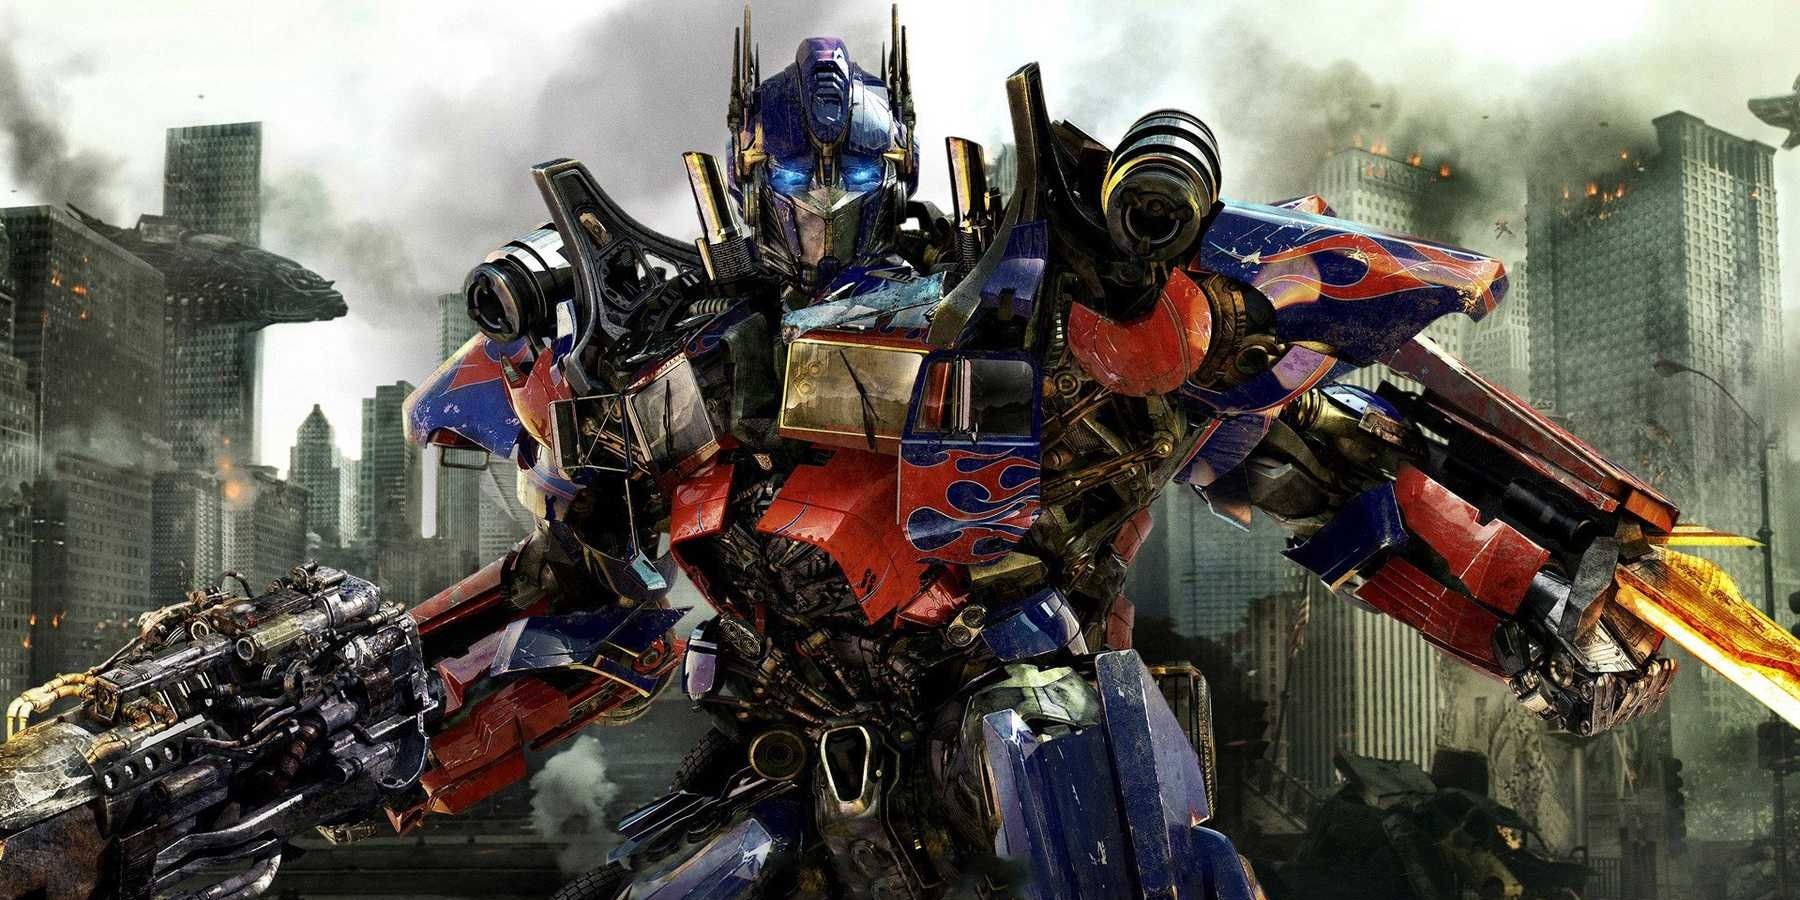 Transformers 7 Set In 1994 Between Bumblebee & Bay Movies